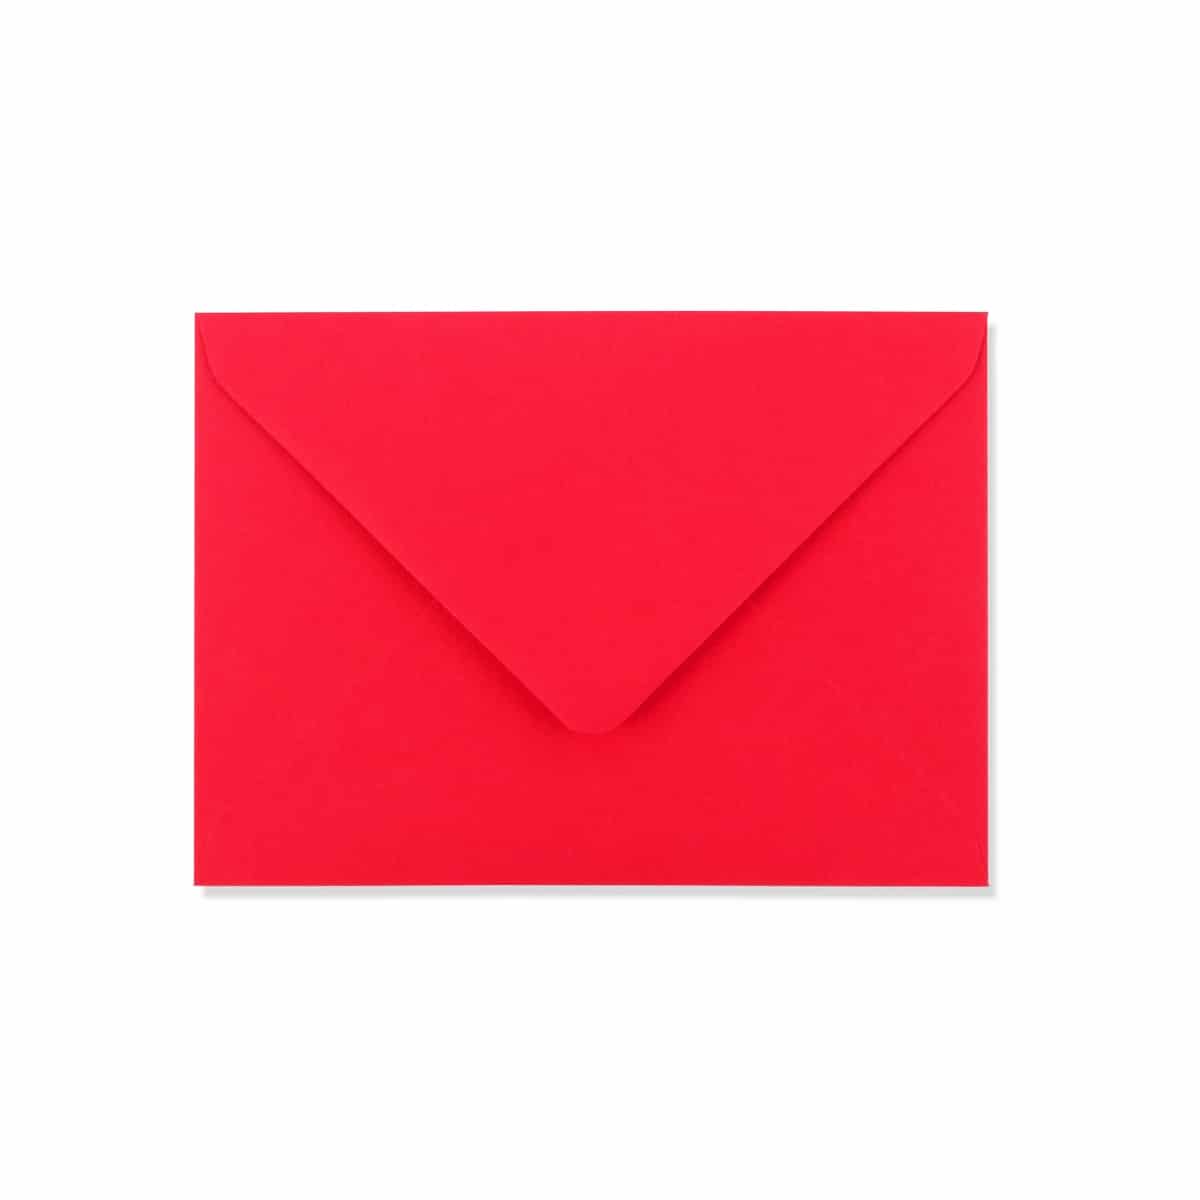 Rode envelop